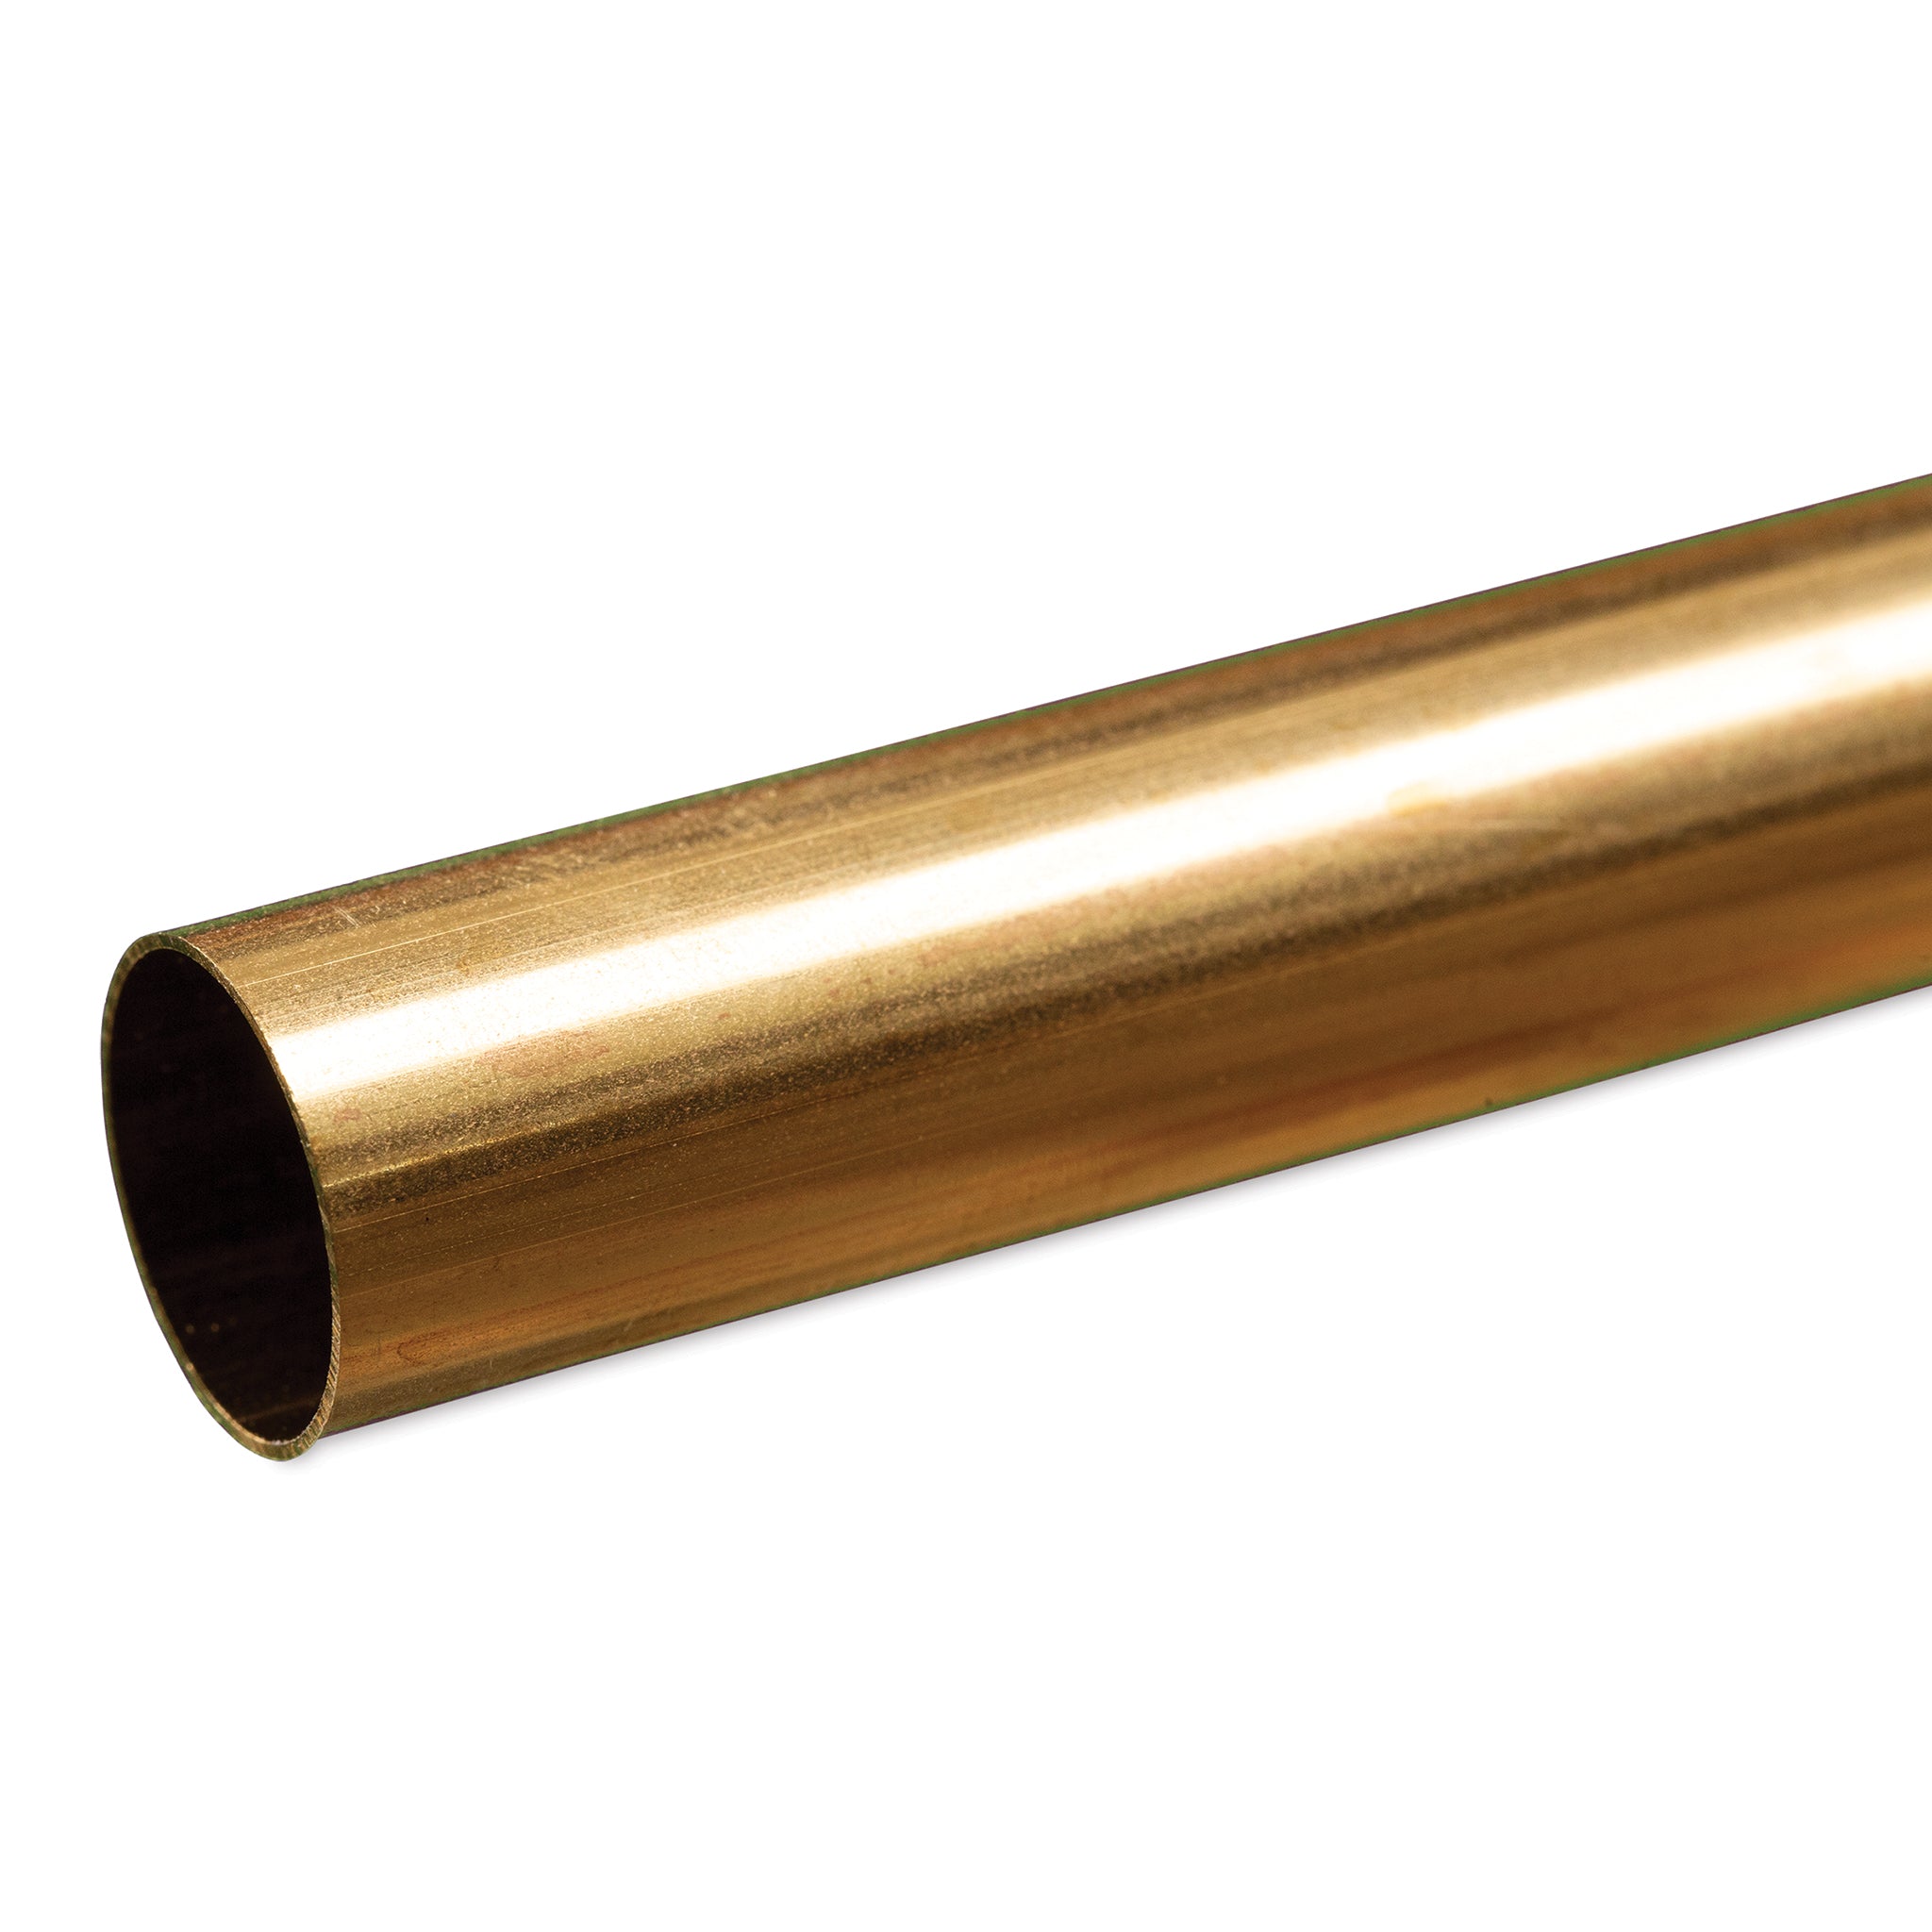 K&S Metals 8142 Round Brass Tube 19/32" OD x 0.014" Wall x 12" Long (1 Piece)